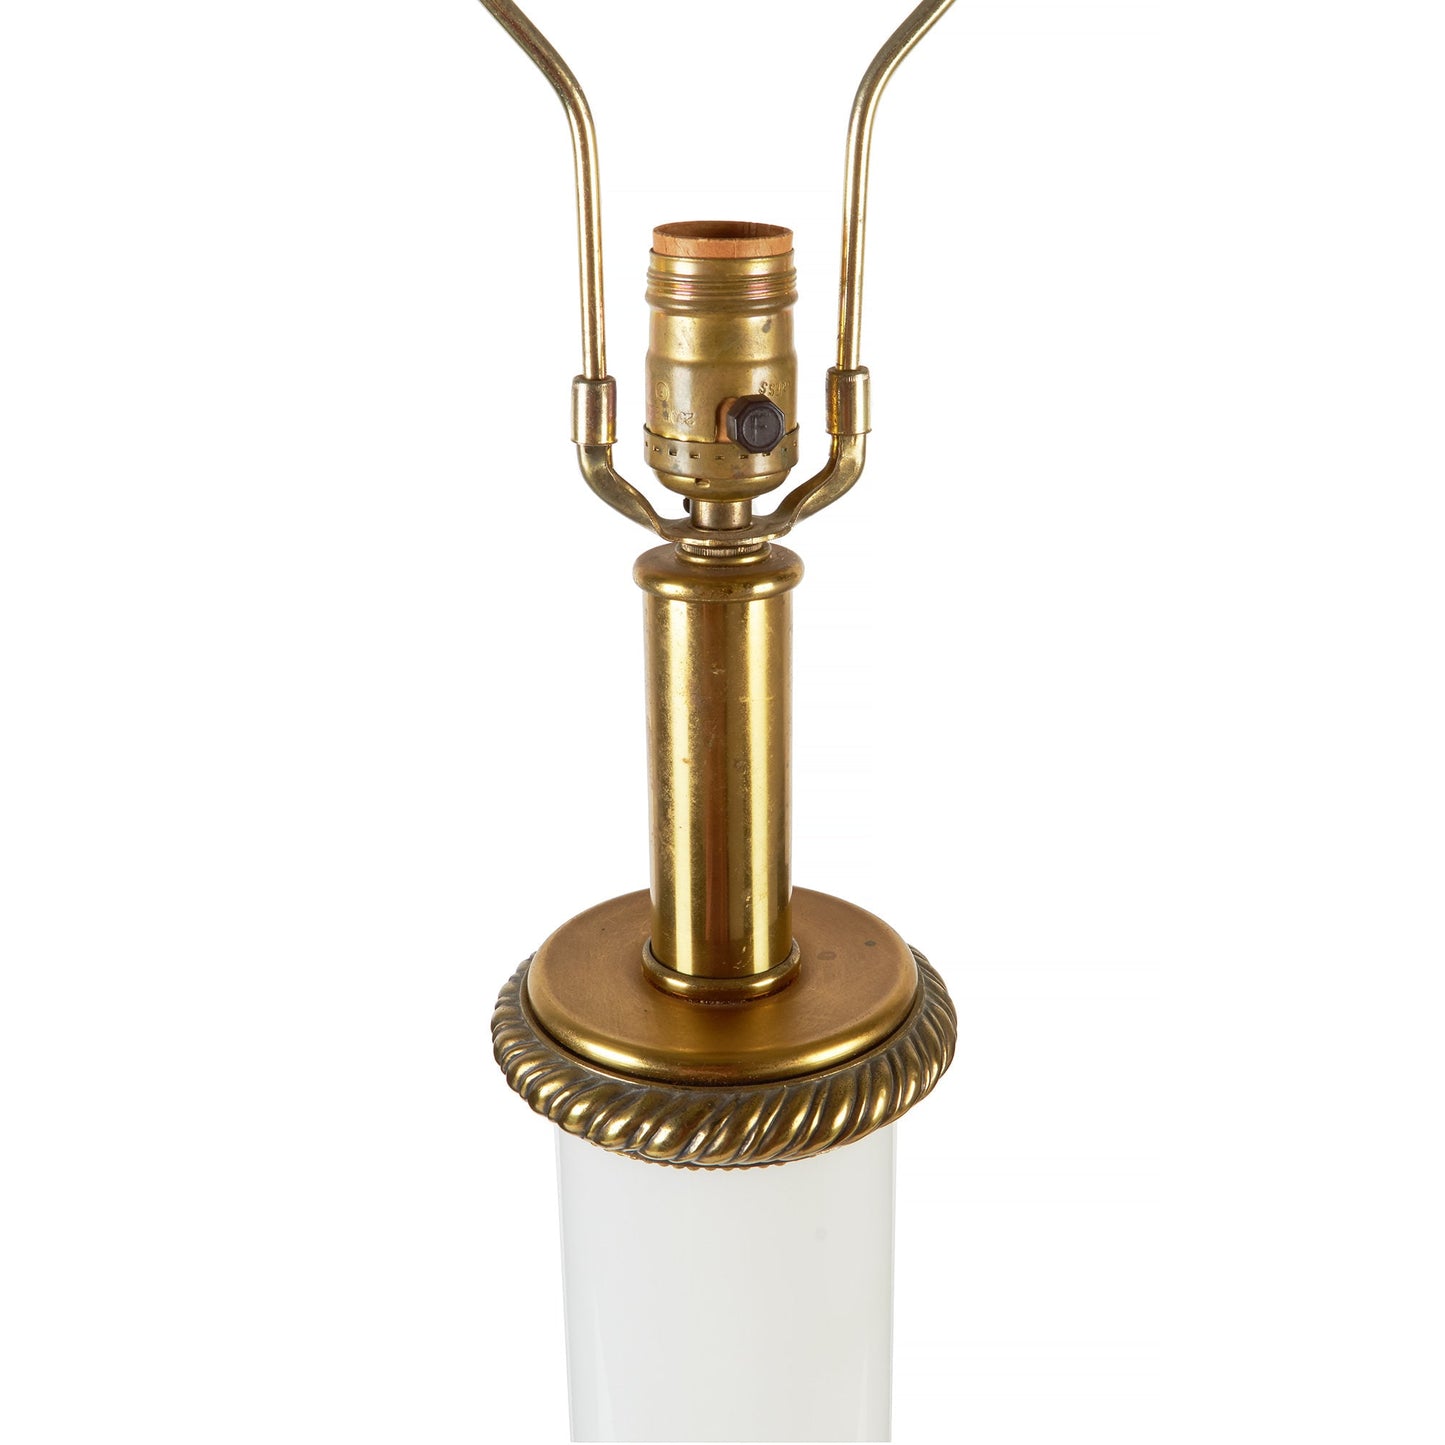 Stiffel Hollywood Regency Table Lamp